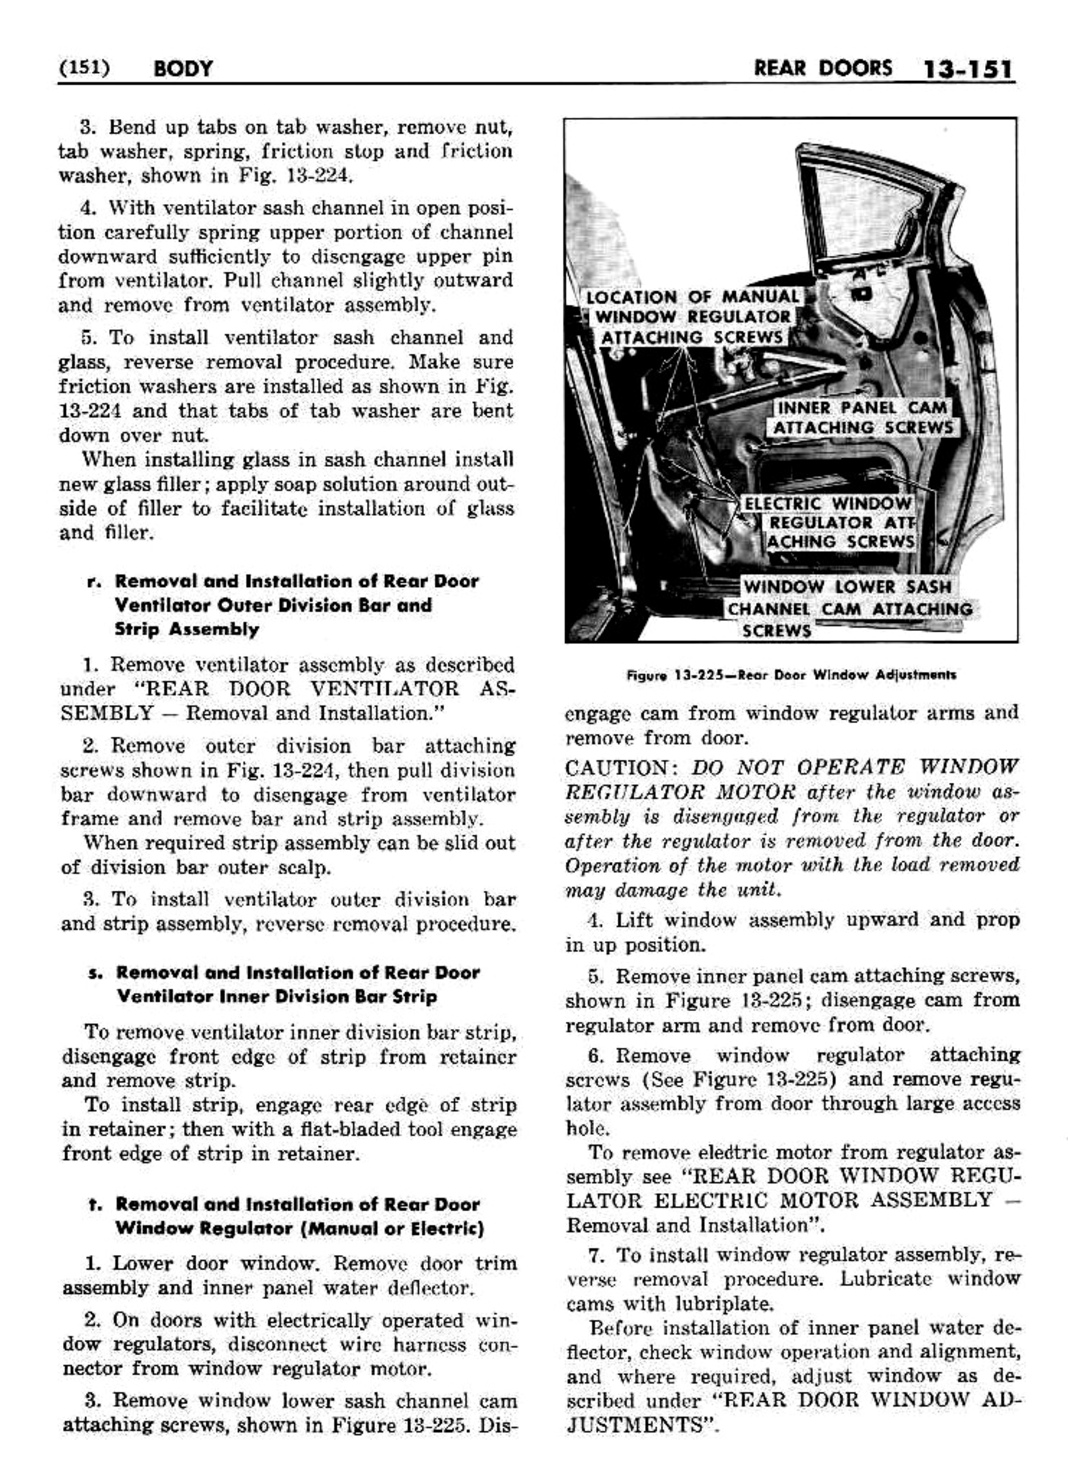 n_1958 Buick Body Service Manual-152-152.jpg